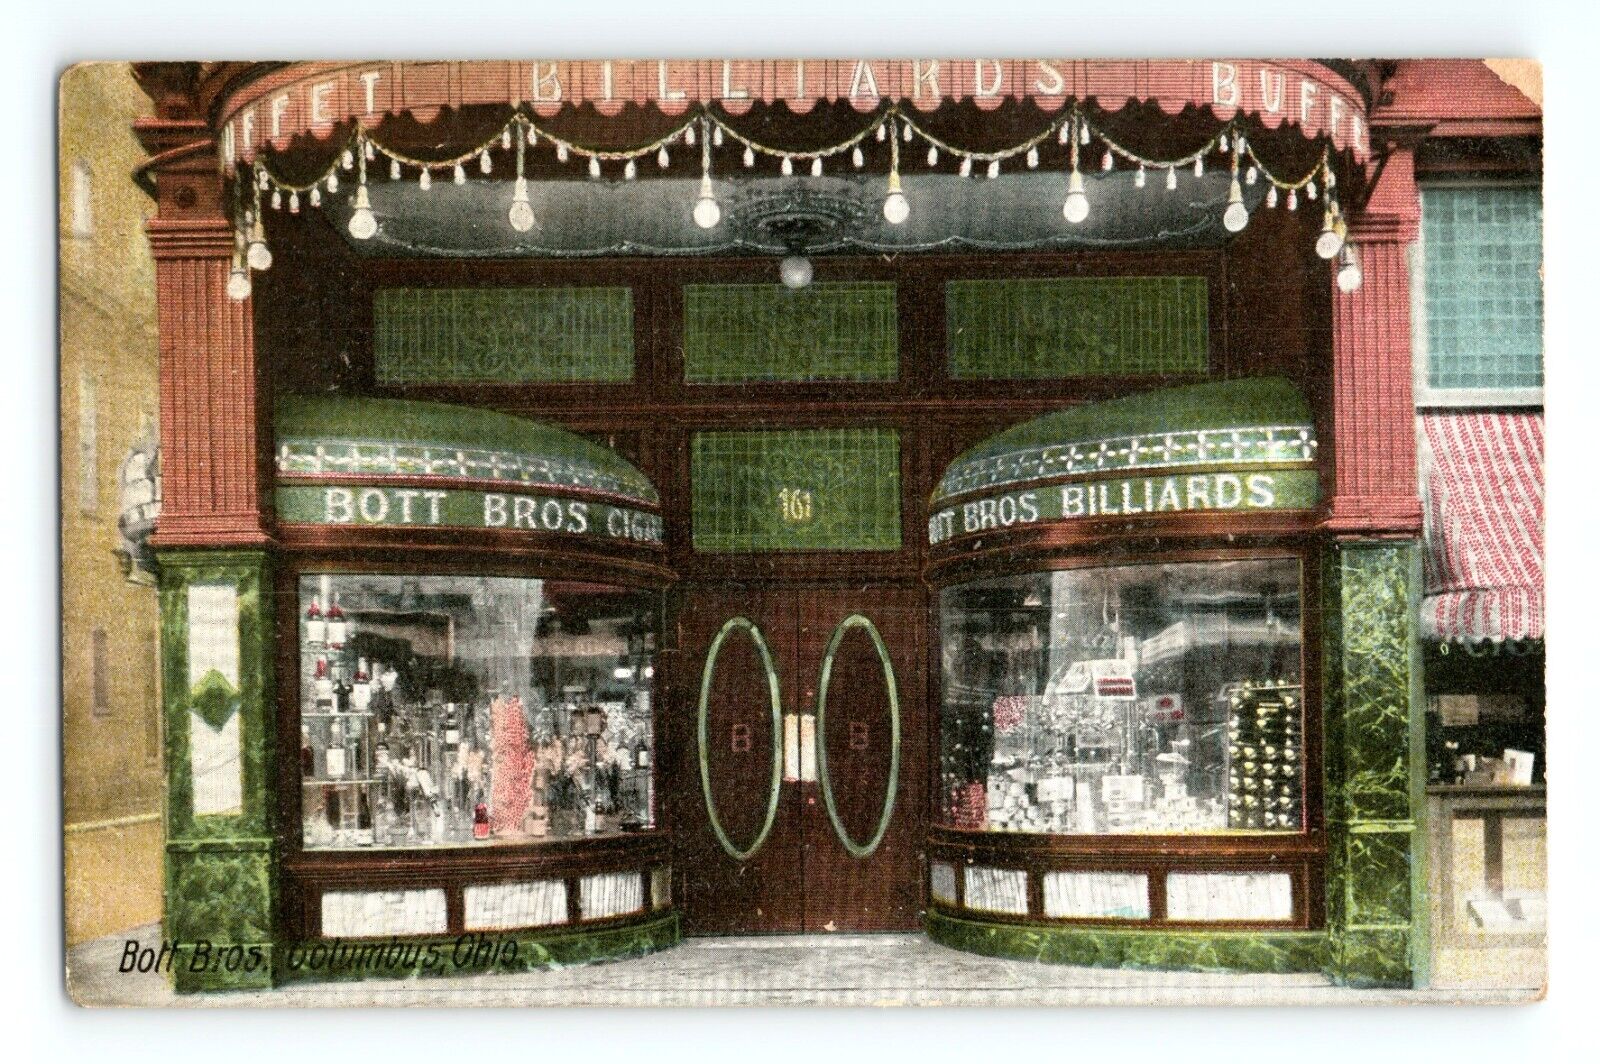 c.1910 Postcard Bott Bros Club Billiards Cigars Street View Entrance Columbus OH